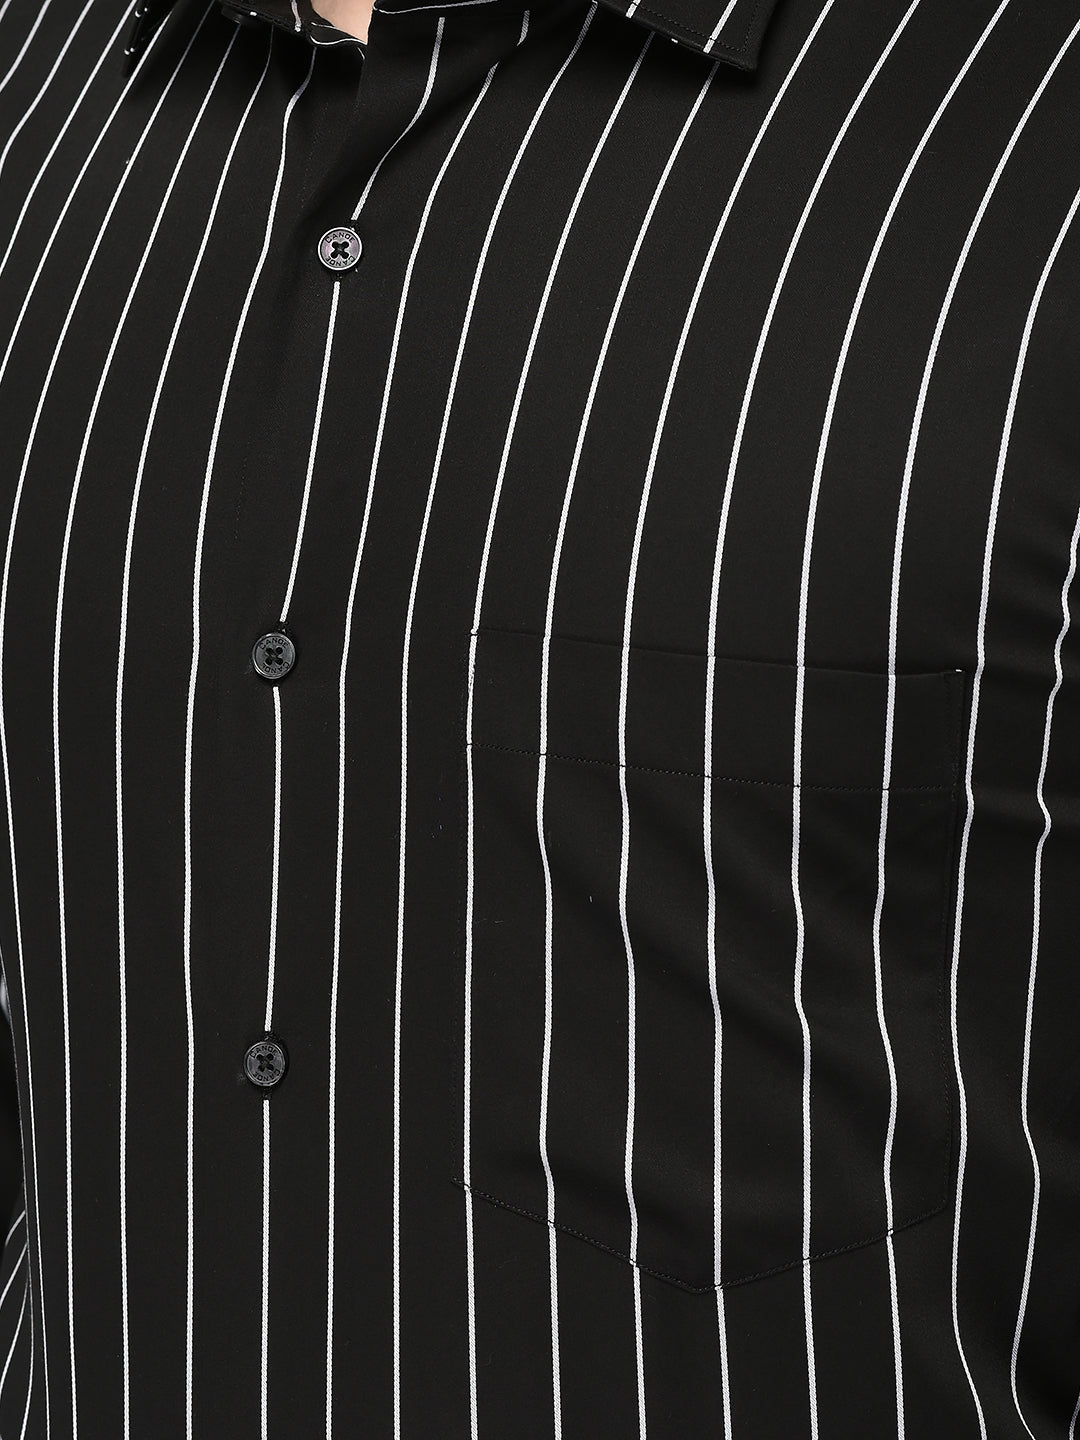 CANOE MEN Formal Shirt Black Color Cotton Fabric Button Closure Striped